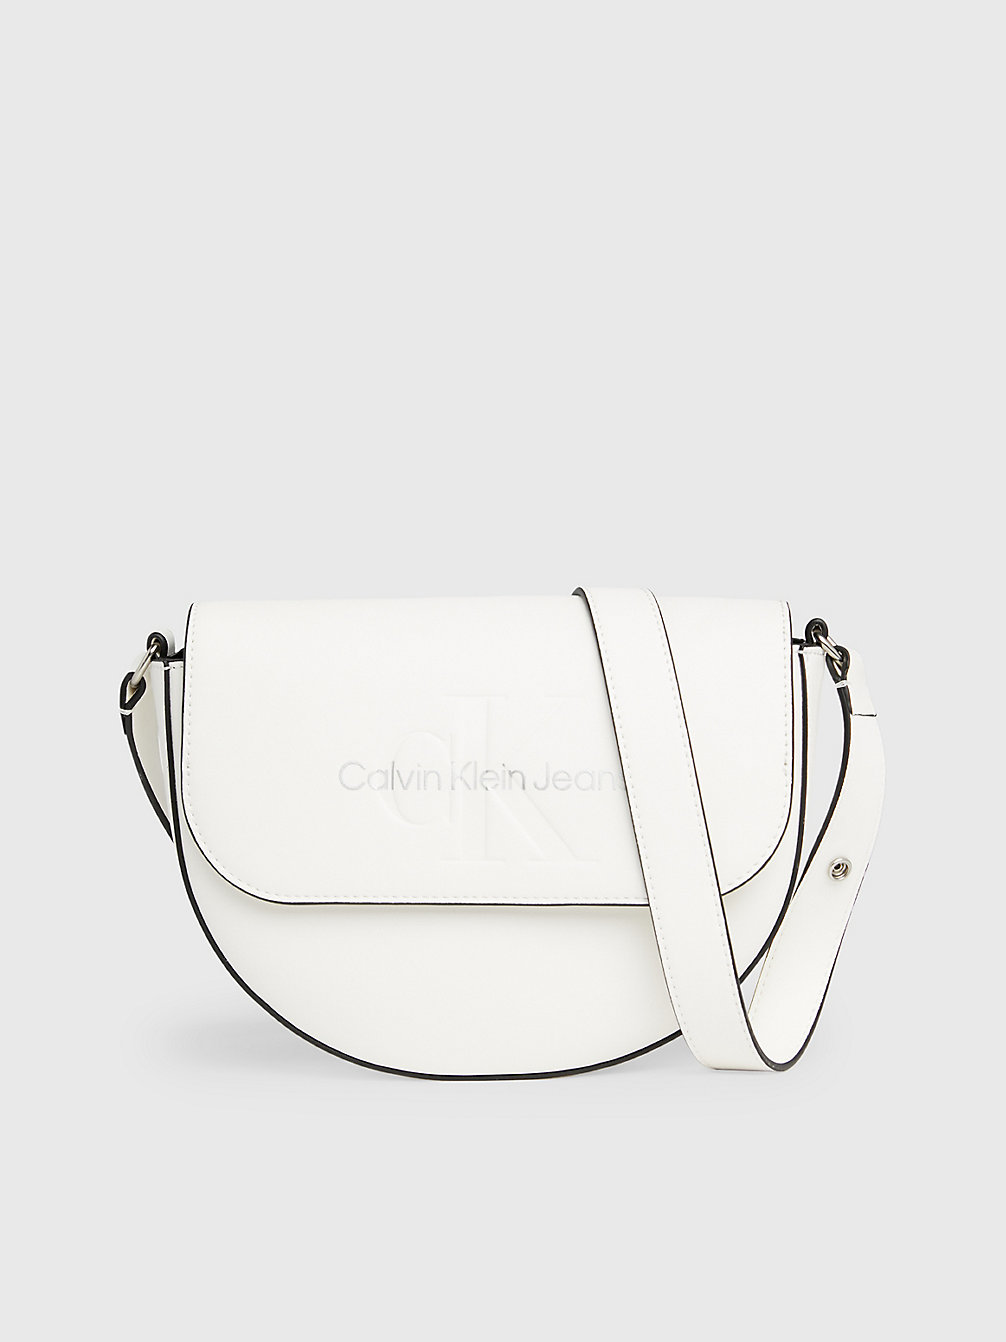 WHITE/SILVER LOGO Borsa A Tracolla undefined Donne Calvin Klein